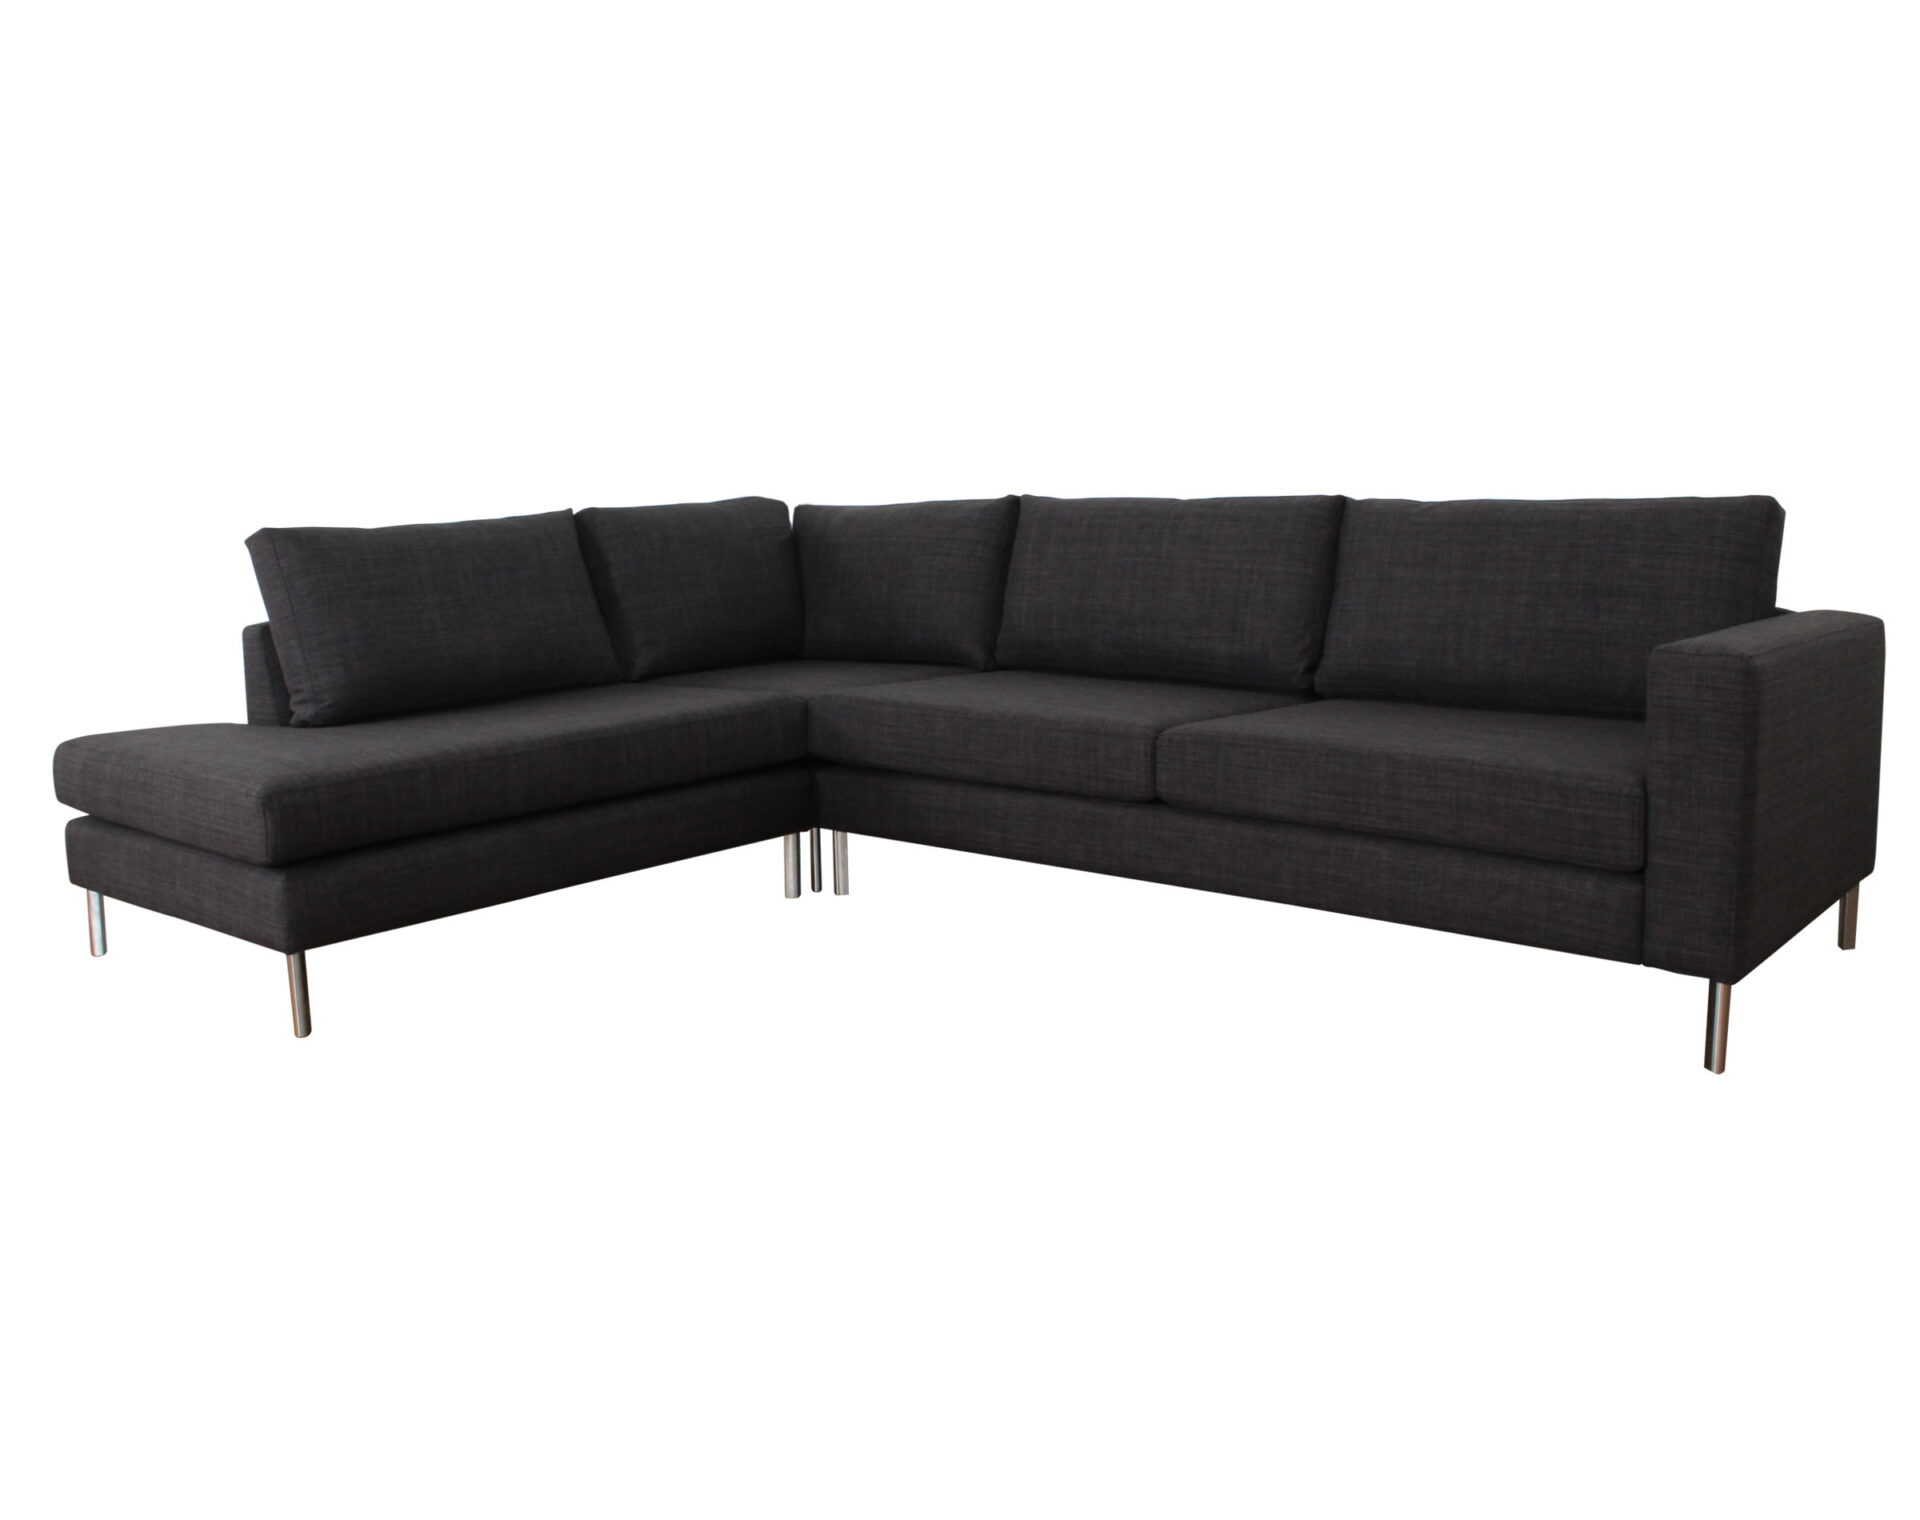 sofa modular izquierdo espacio libre bariloche marengo pata biselada plata 2